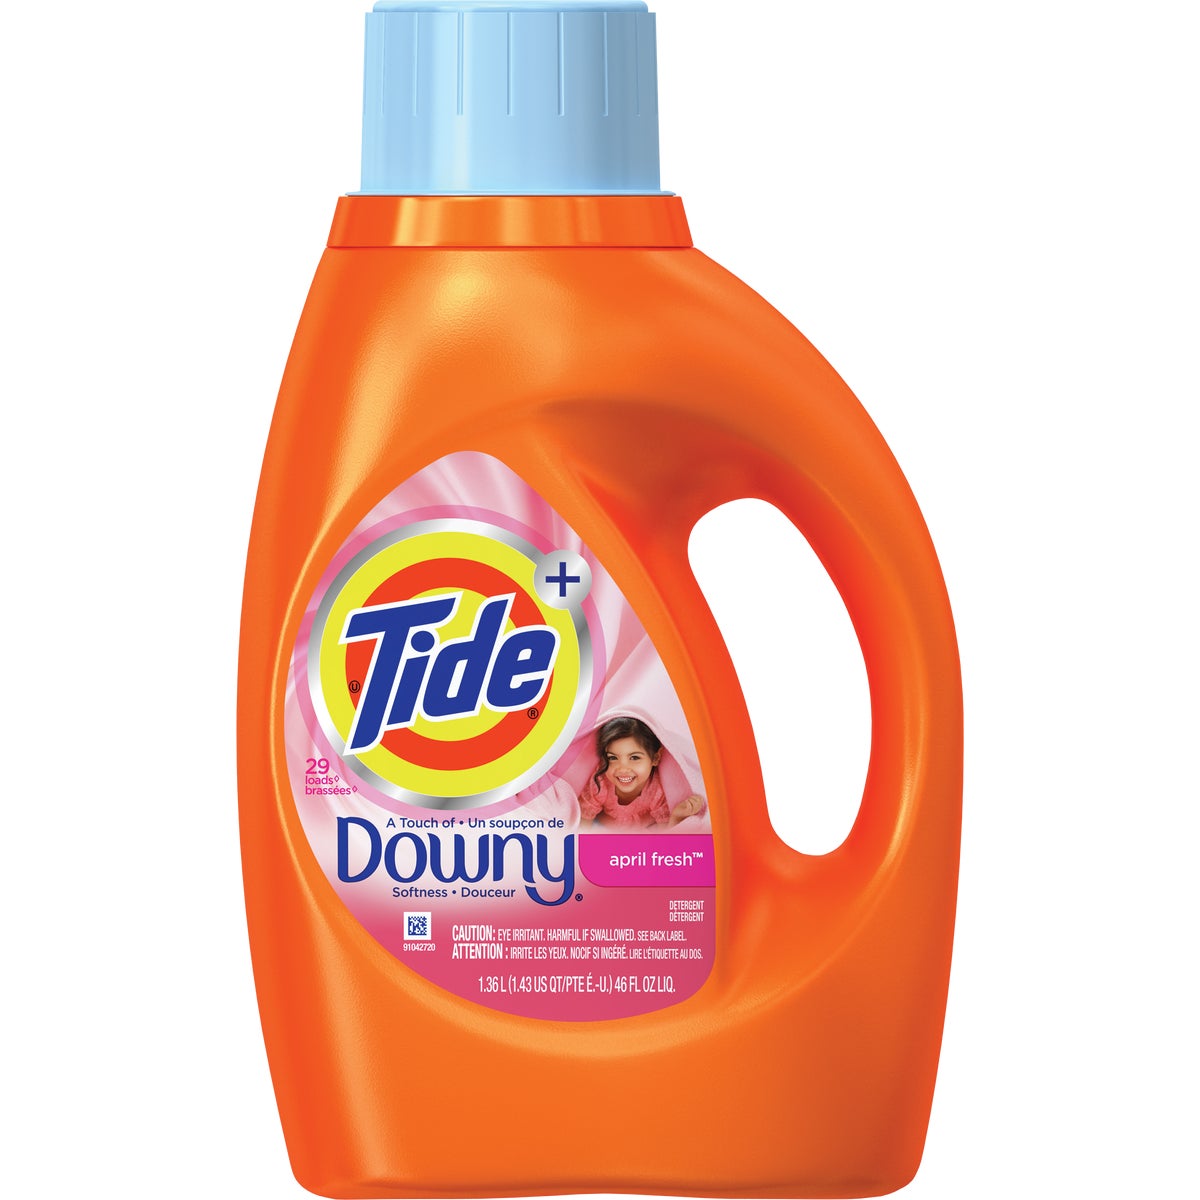 Tide+ 46 Oz. 24 Load Downy 2X Liquid Laundry Detergent